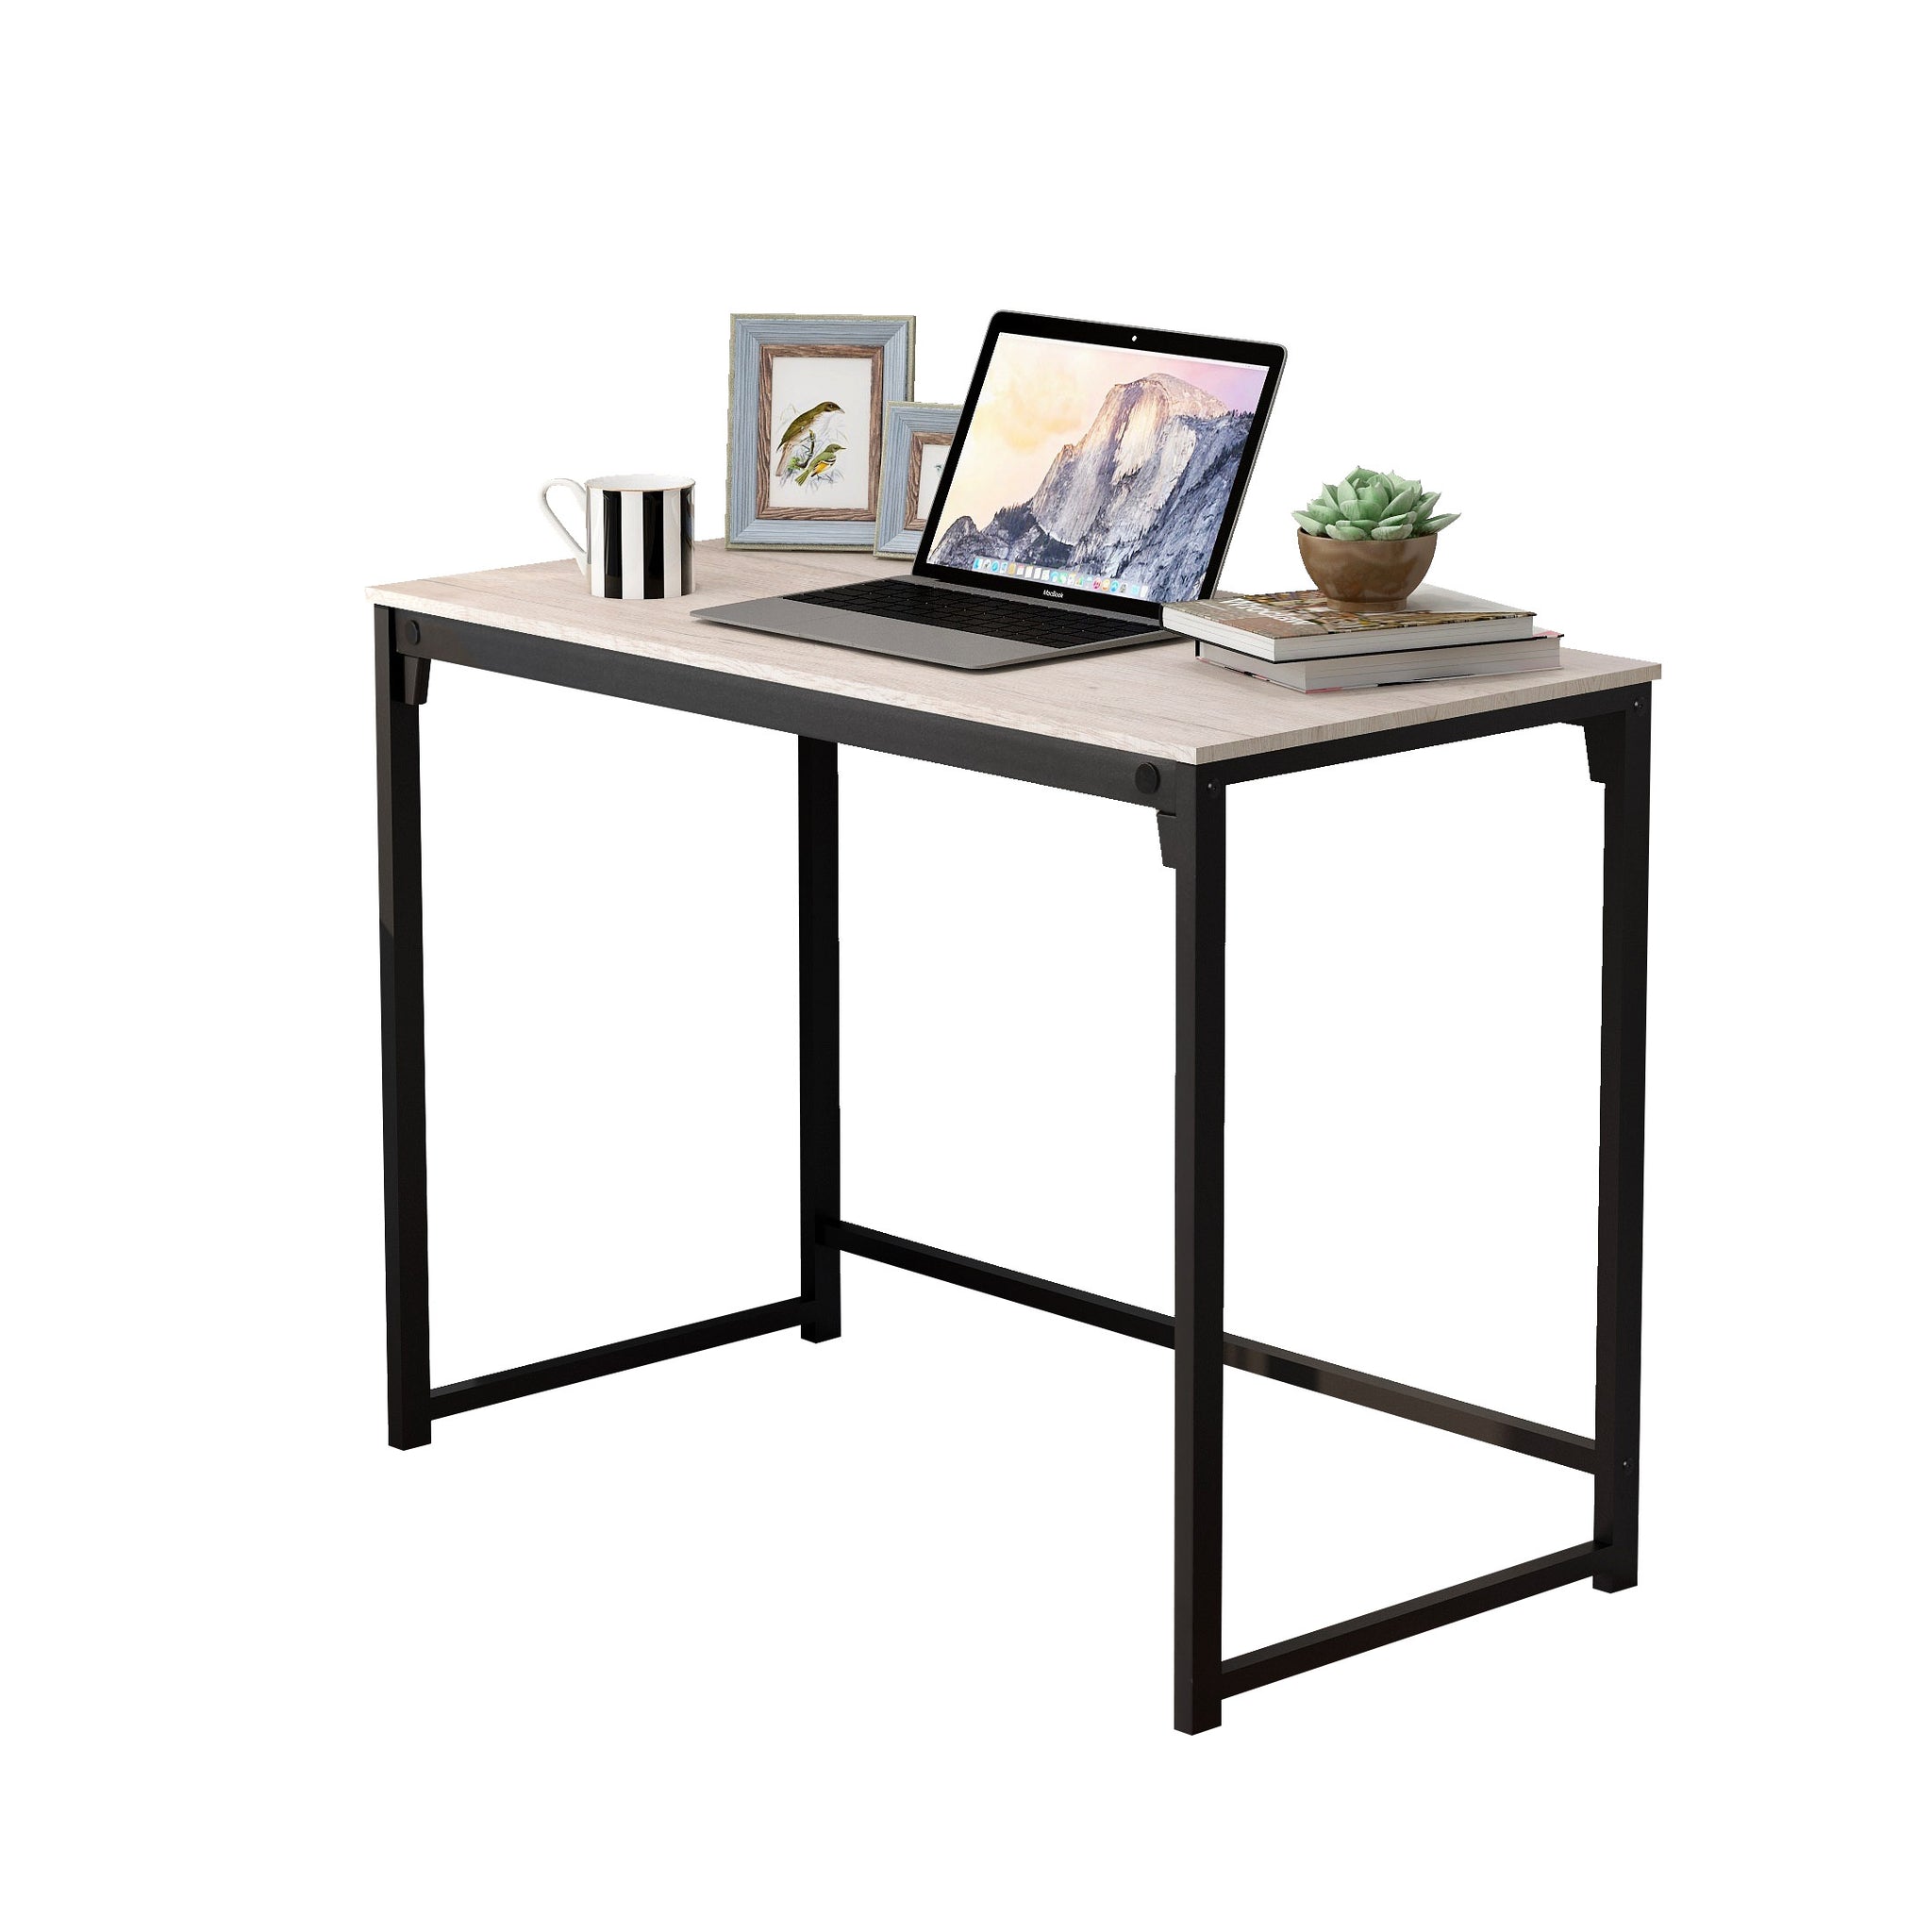 RaDEWAY Computer Desk, Modern Simple Style Desk for Home Office, Sturdy Writing Desk